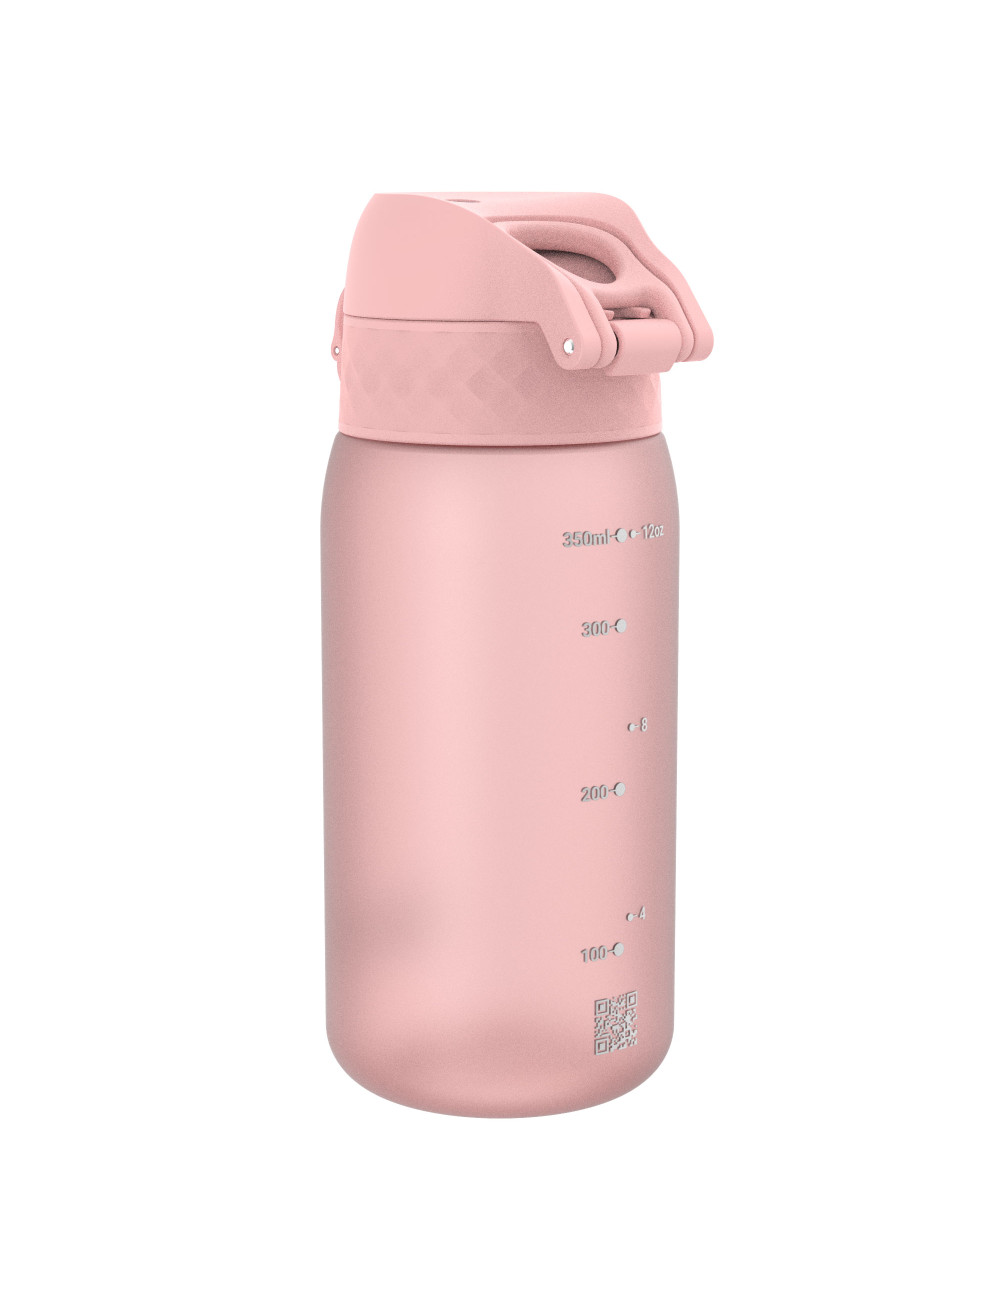 Butelka ION8 BPA Free Rose Quartz 350 ml